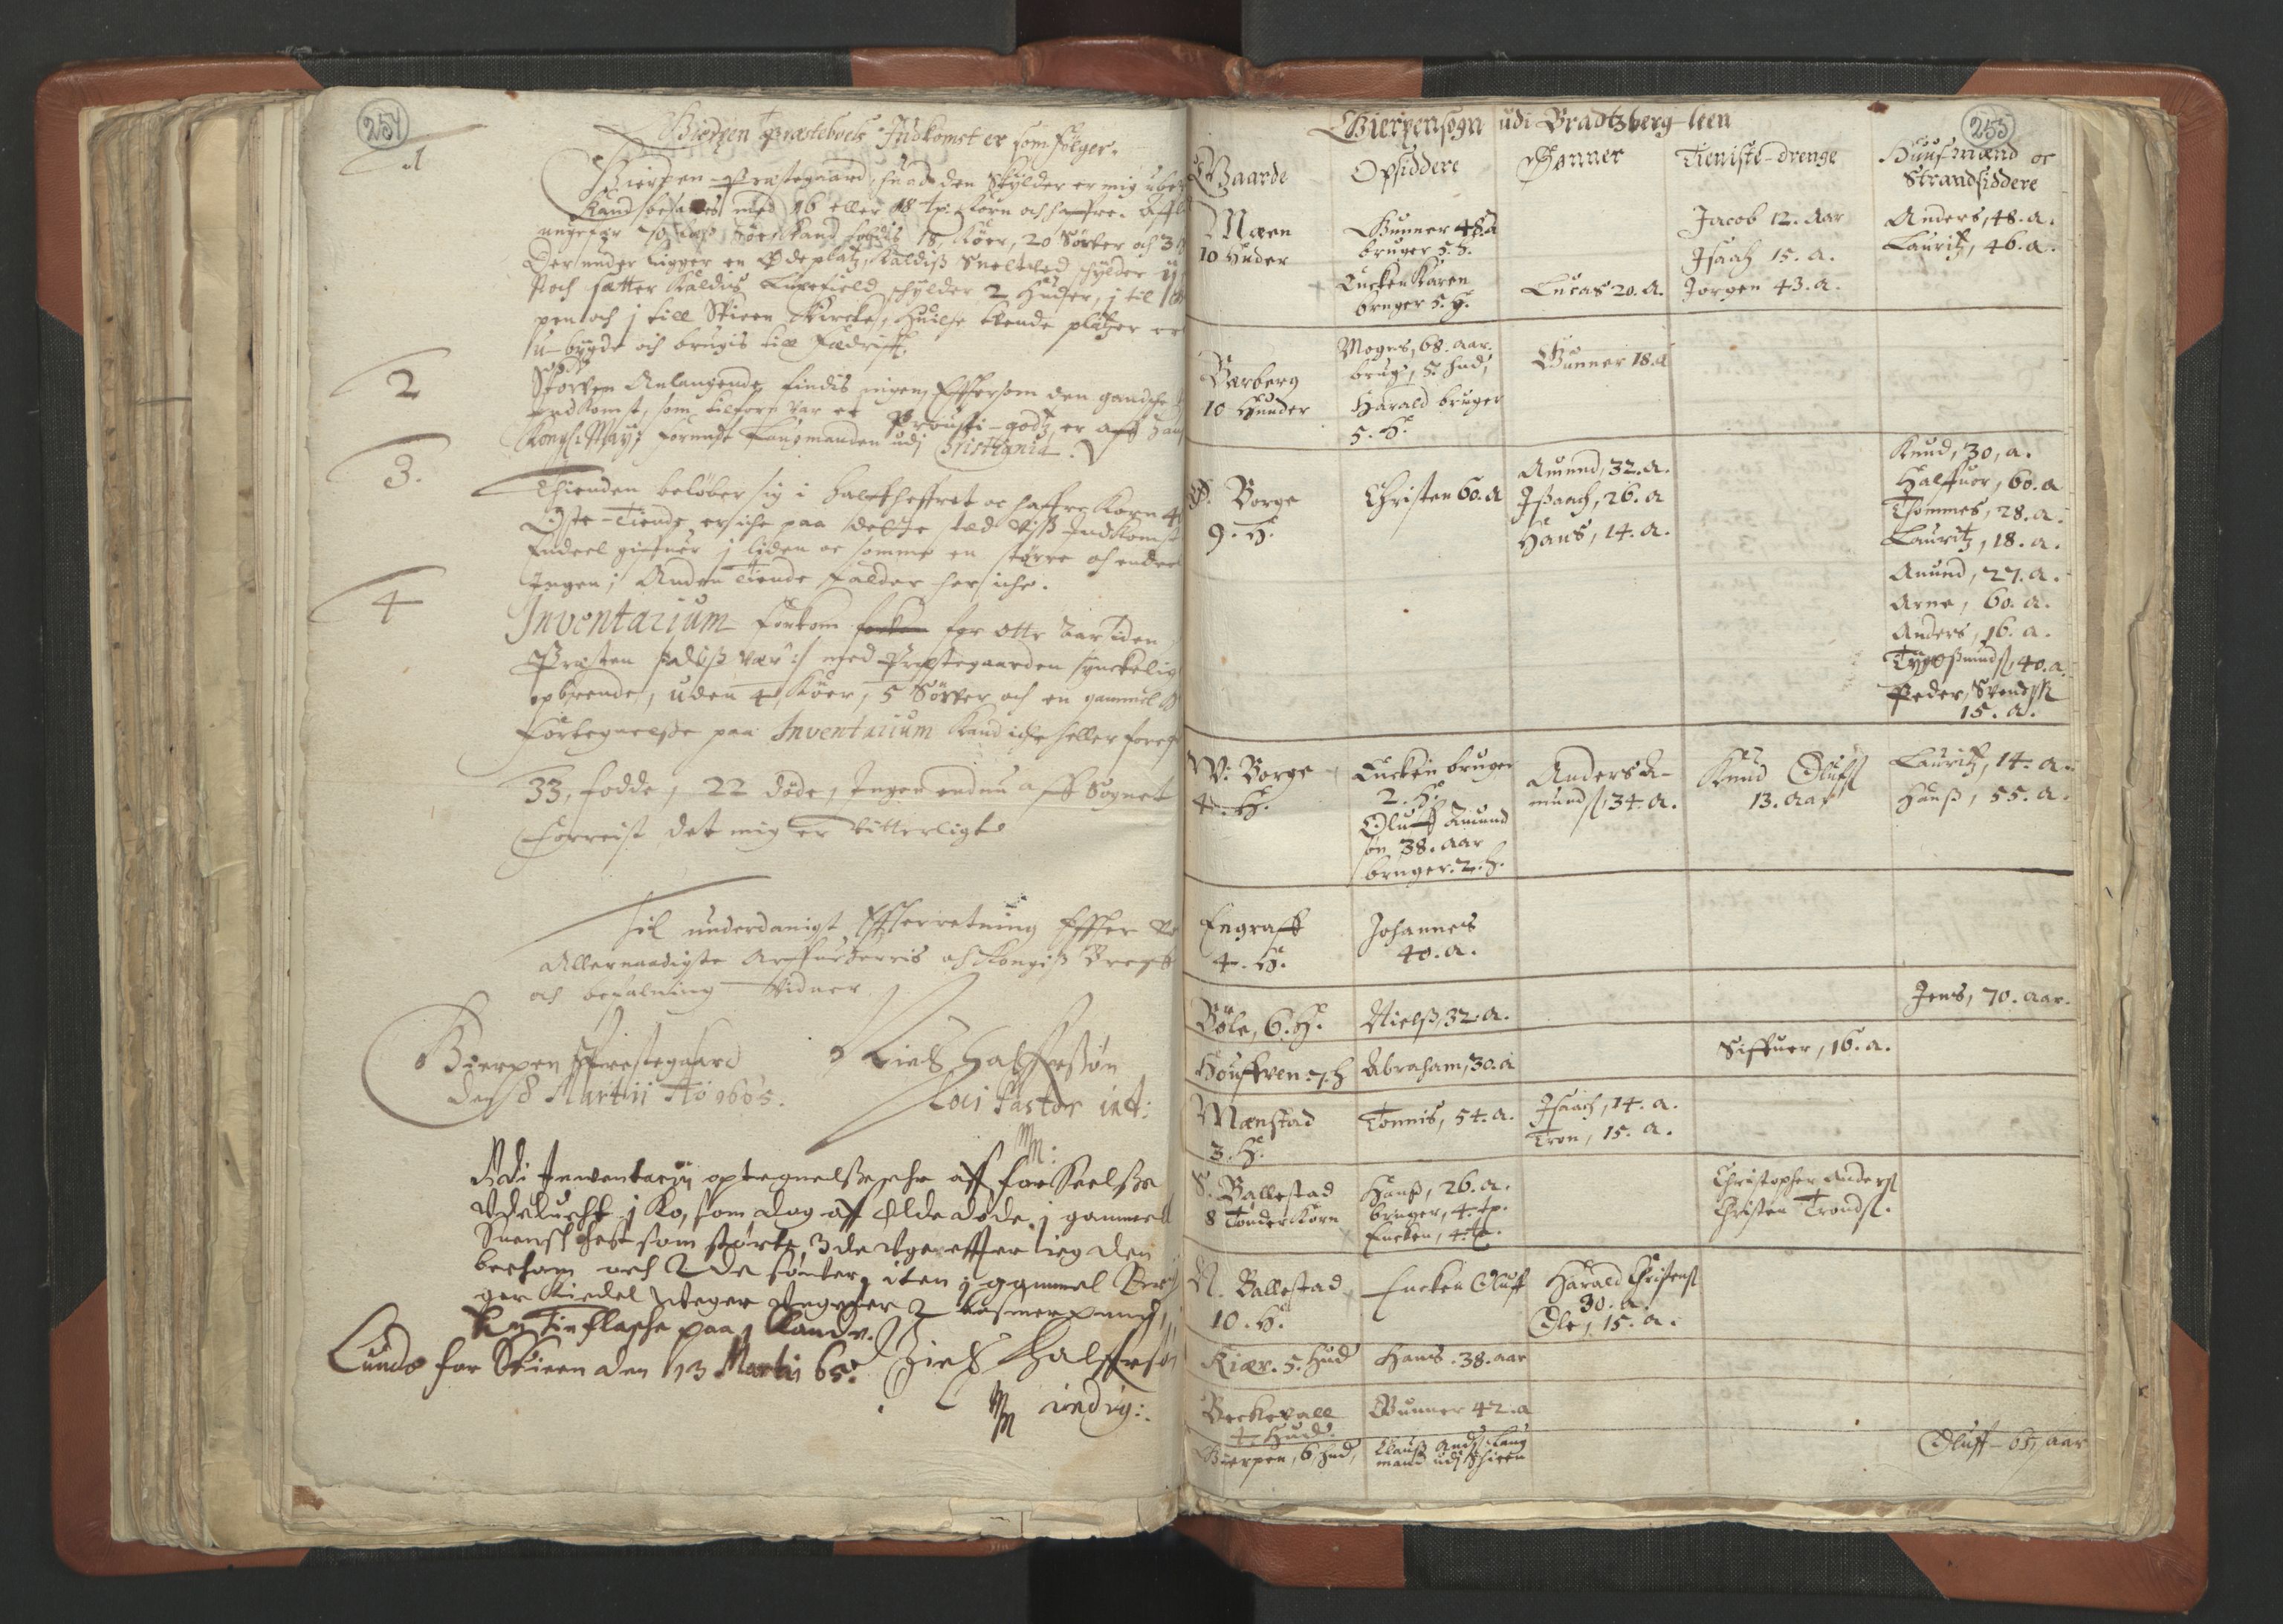 RA, Vicar's Census 1664-1666, no. 12: Øvre Telemark deanery, Nedre Telemark deanery and Bamble deanery, 1664-1666, p. 254-255